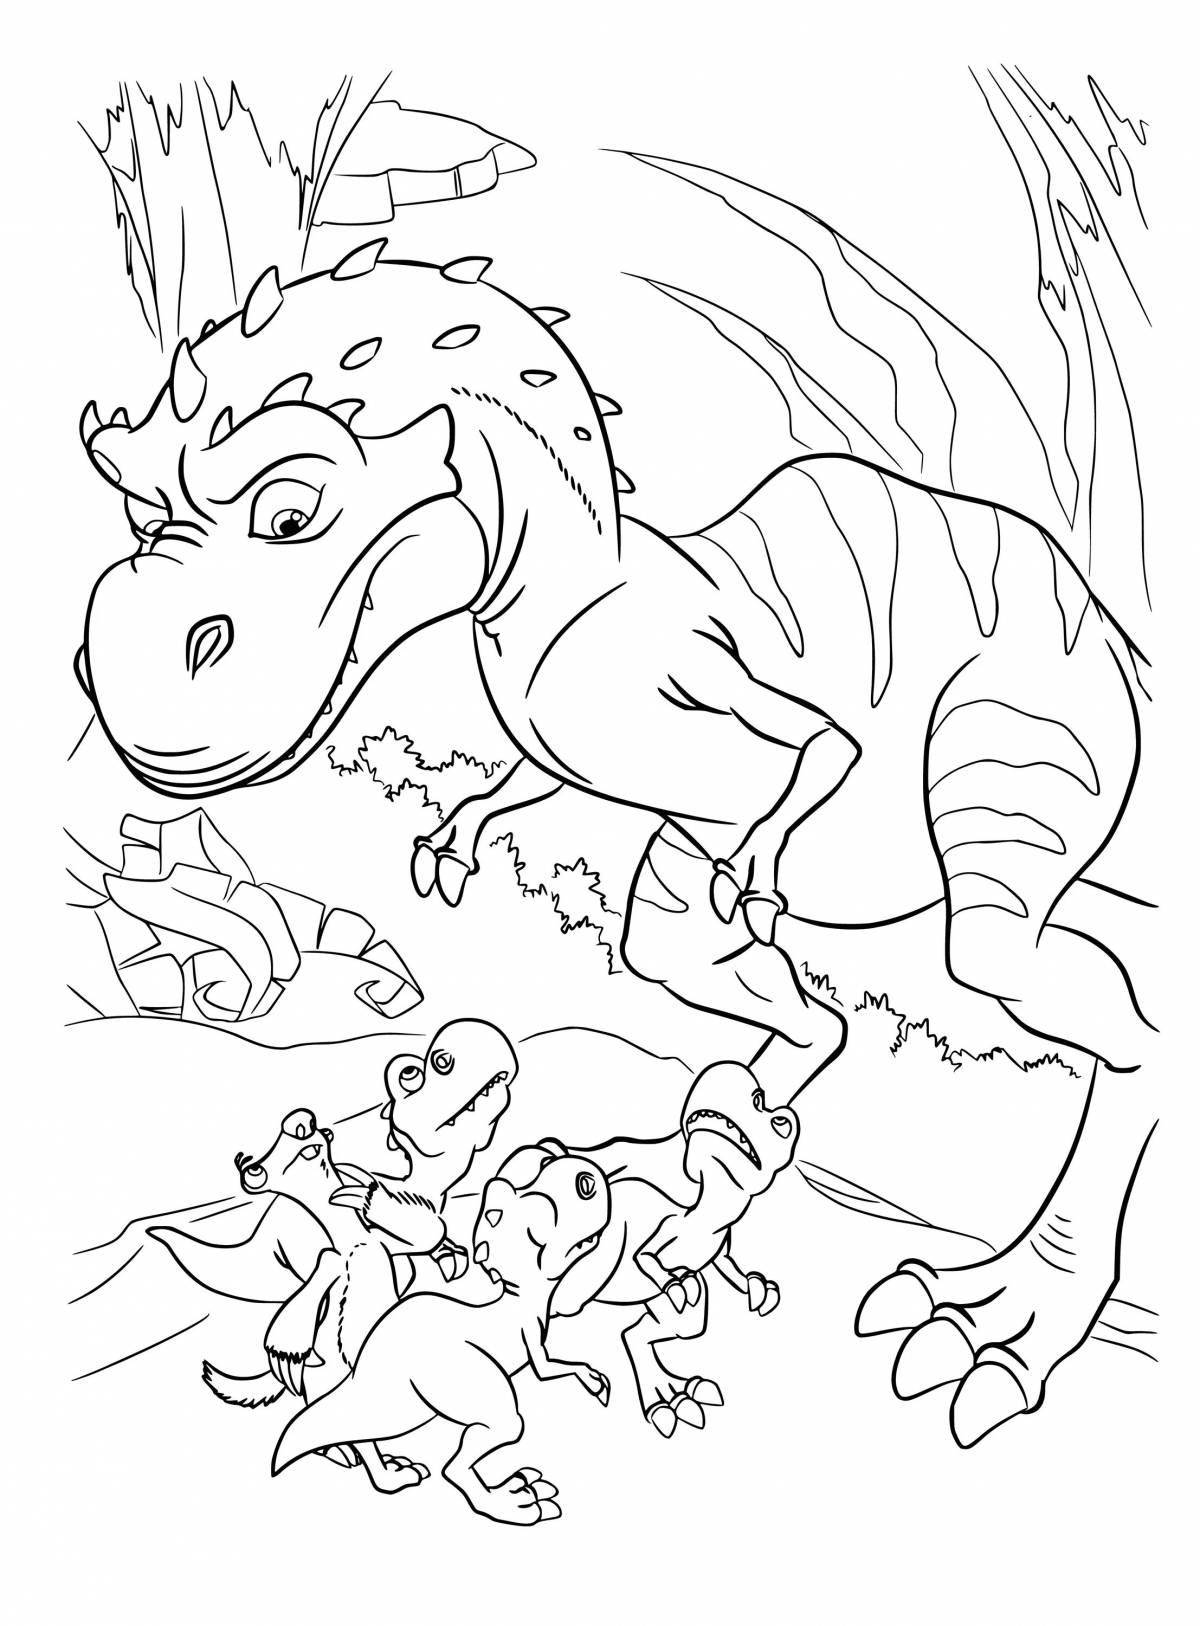 Dinosaur ice age fantasy coloring book